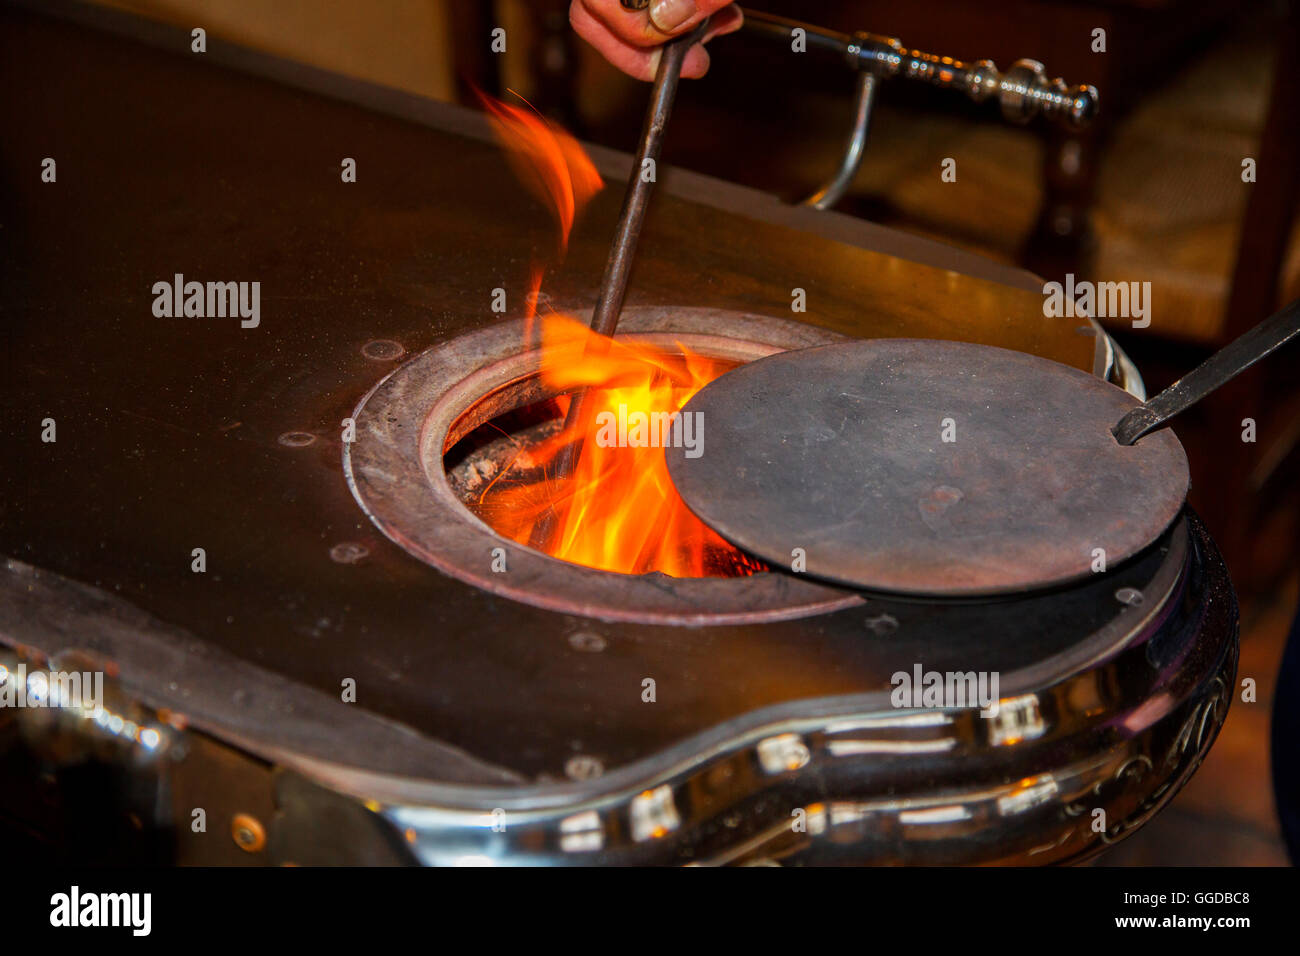 Vintage cast-iron coal stove / Leuvense stoof showing flames and poker Stock Photo